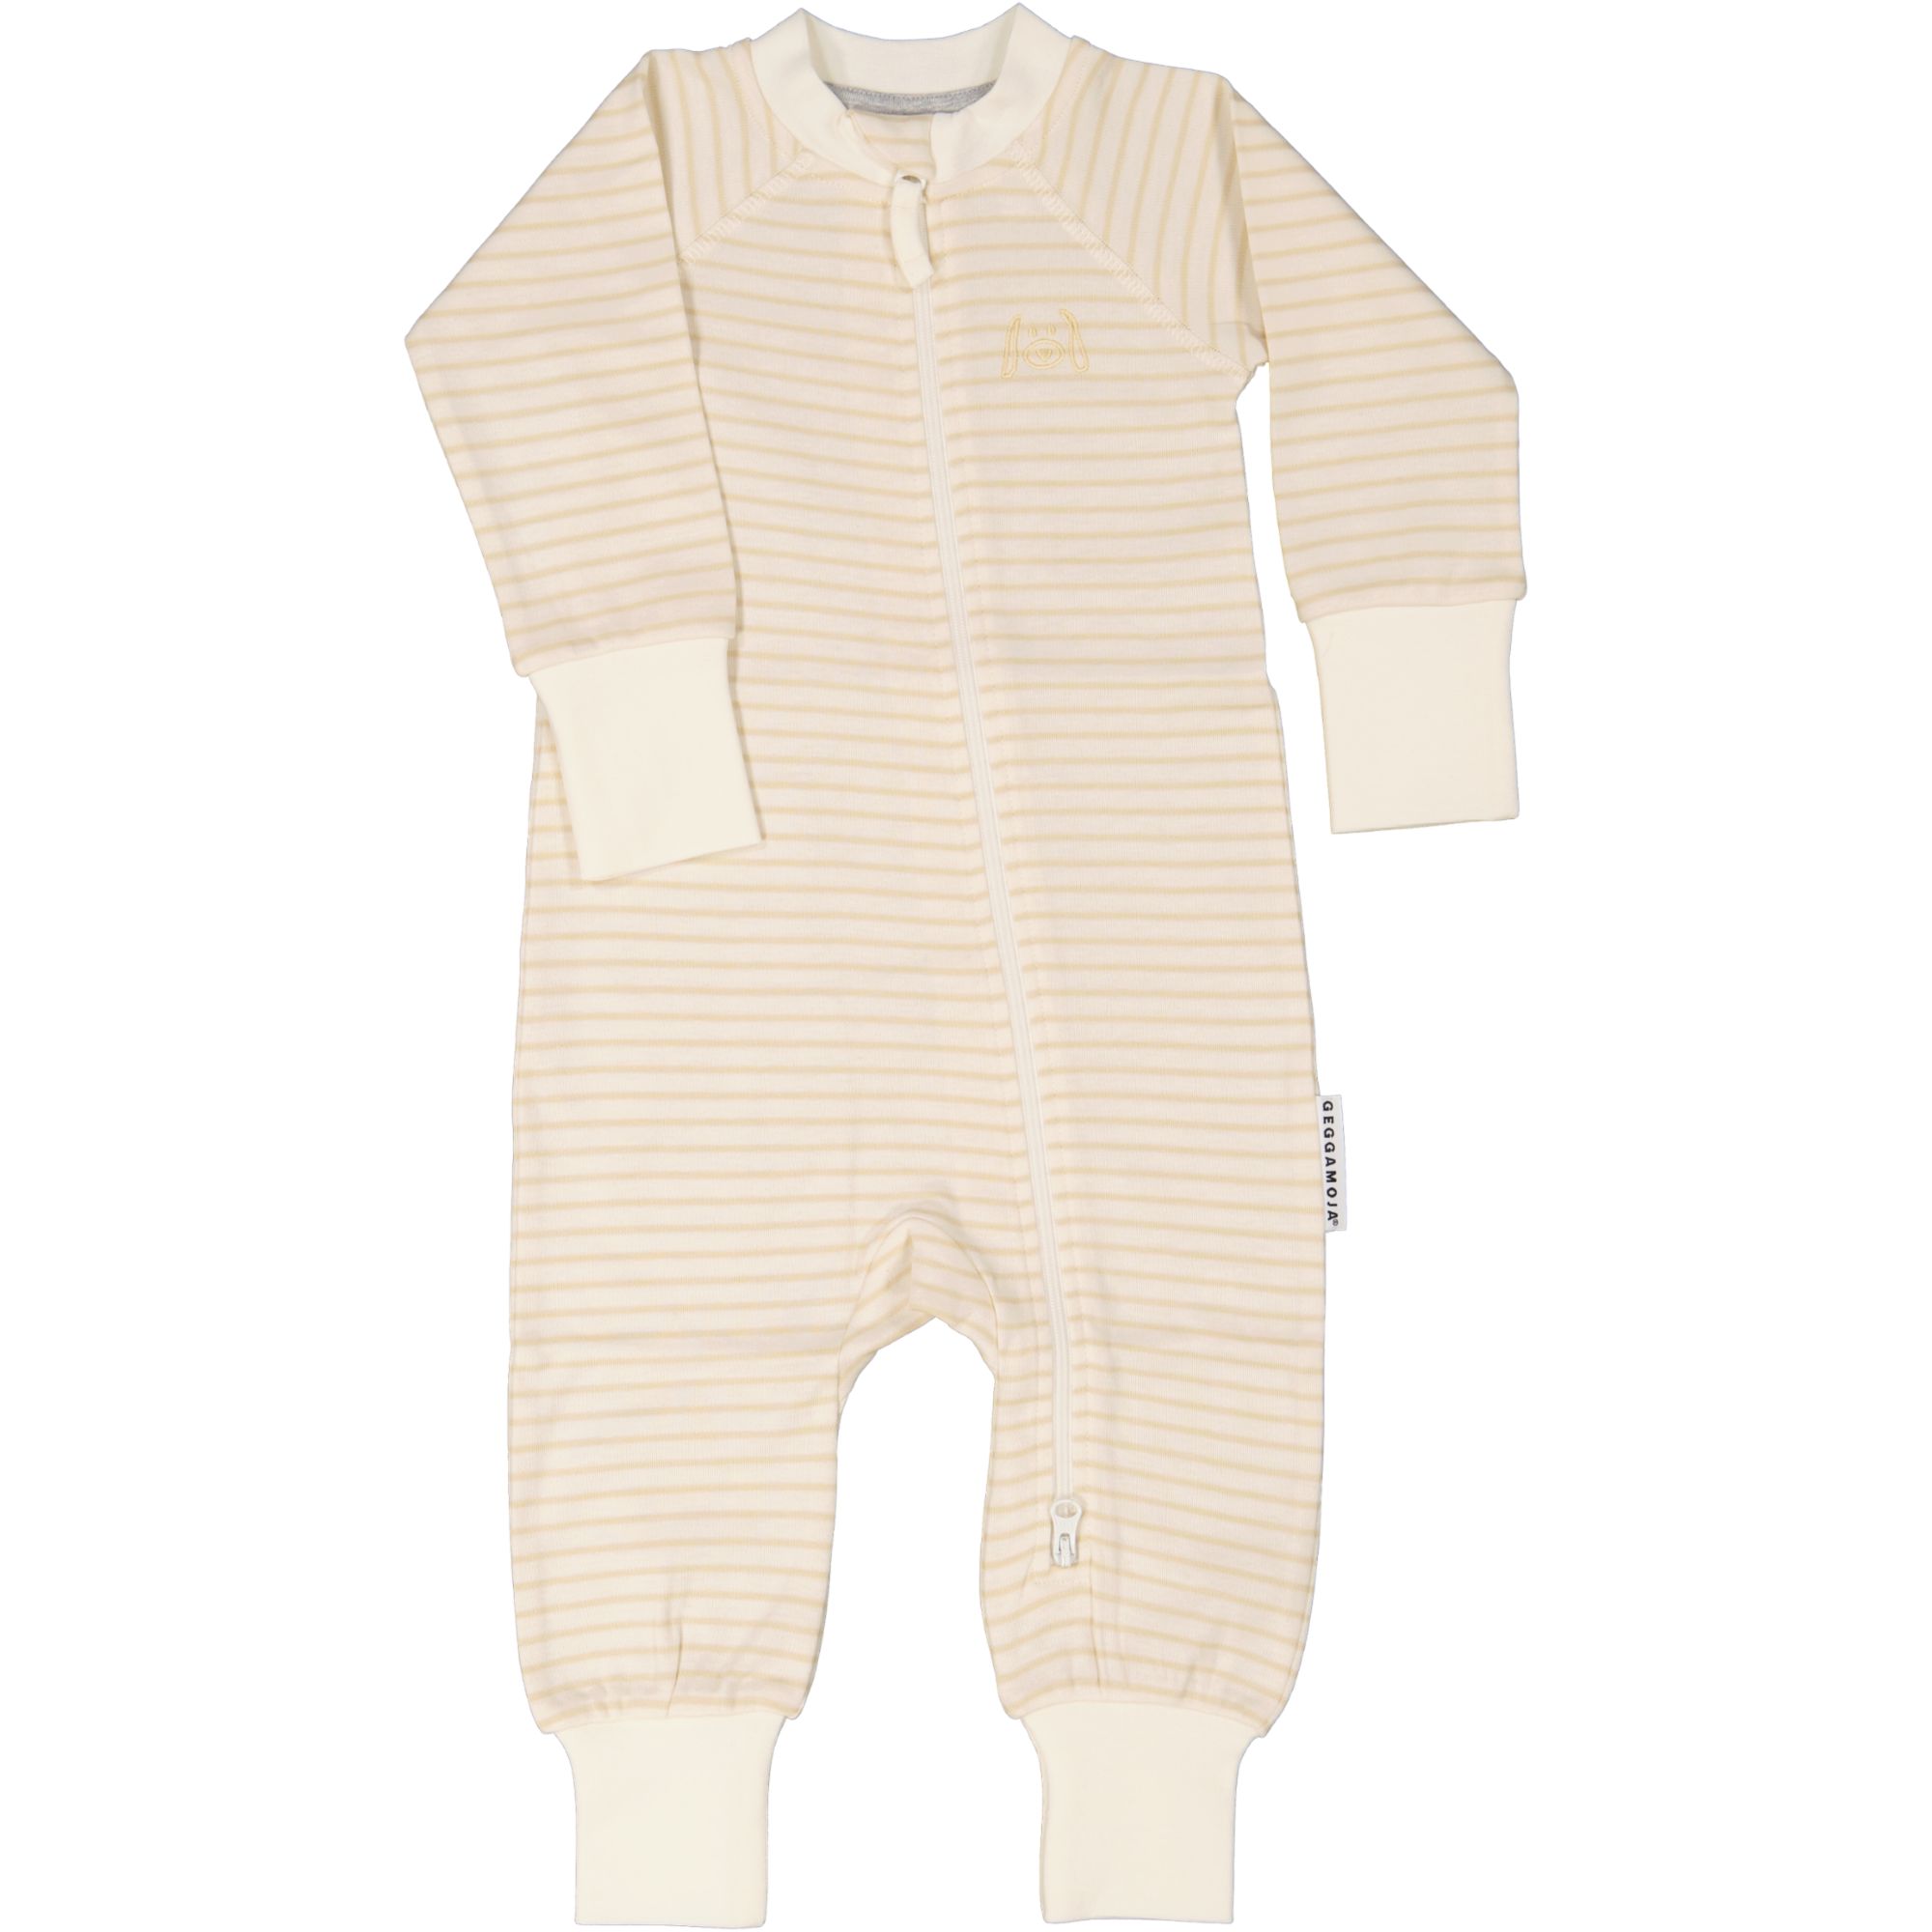 Baby pyjamas White/beige